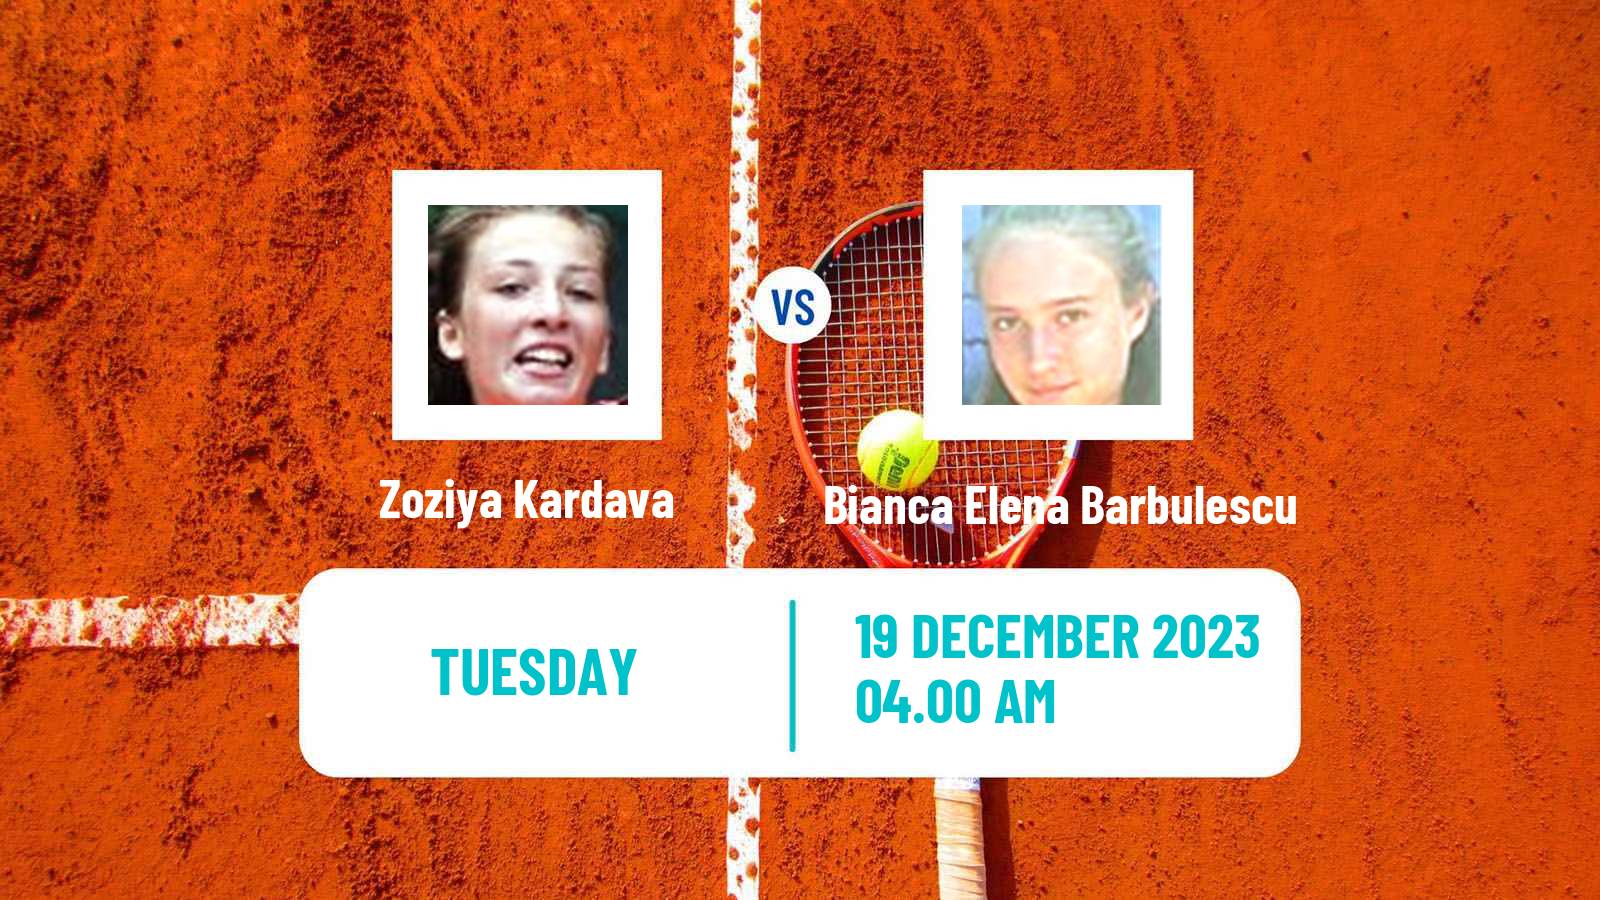 Tennis ITF W15 Antalya 23 Women Zoziya Kardava - Bianca Elena Barbulescu